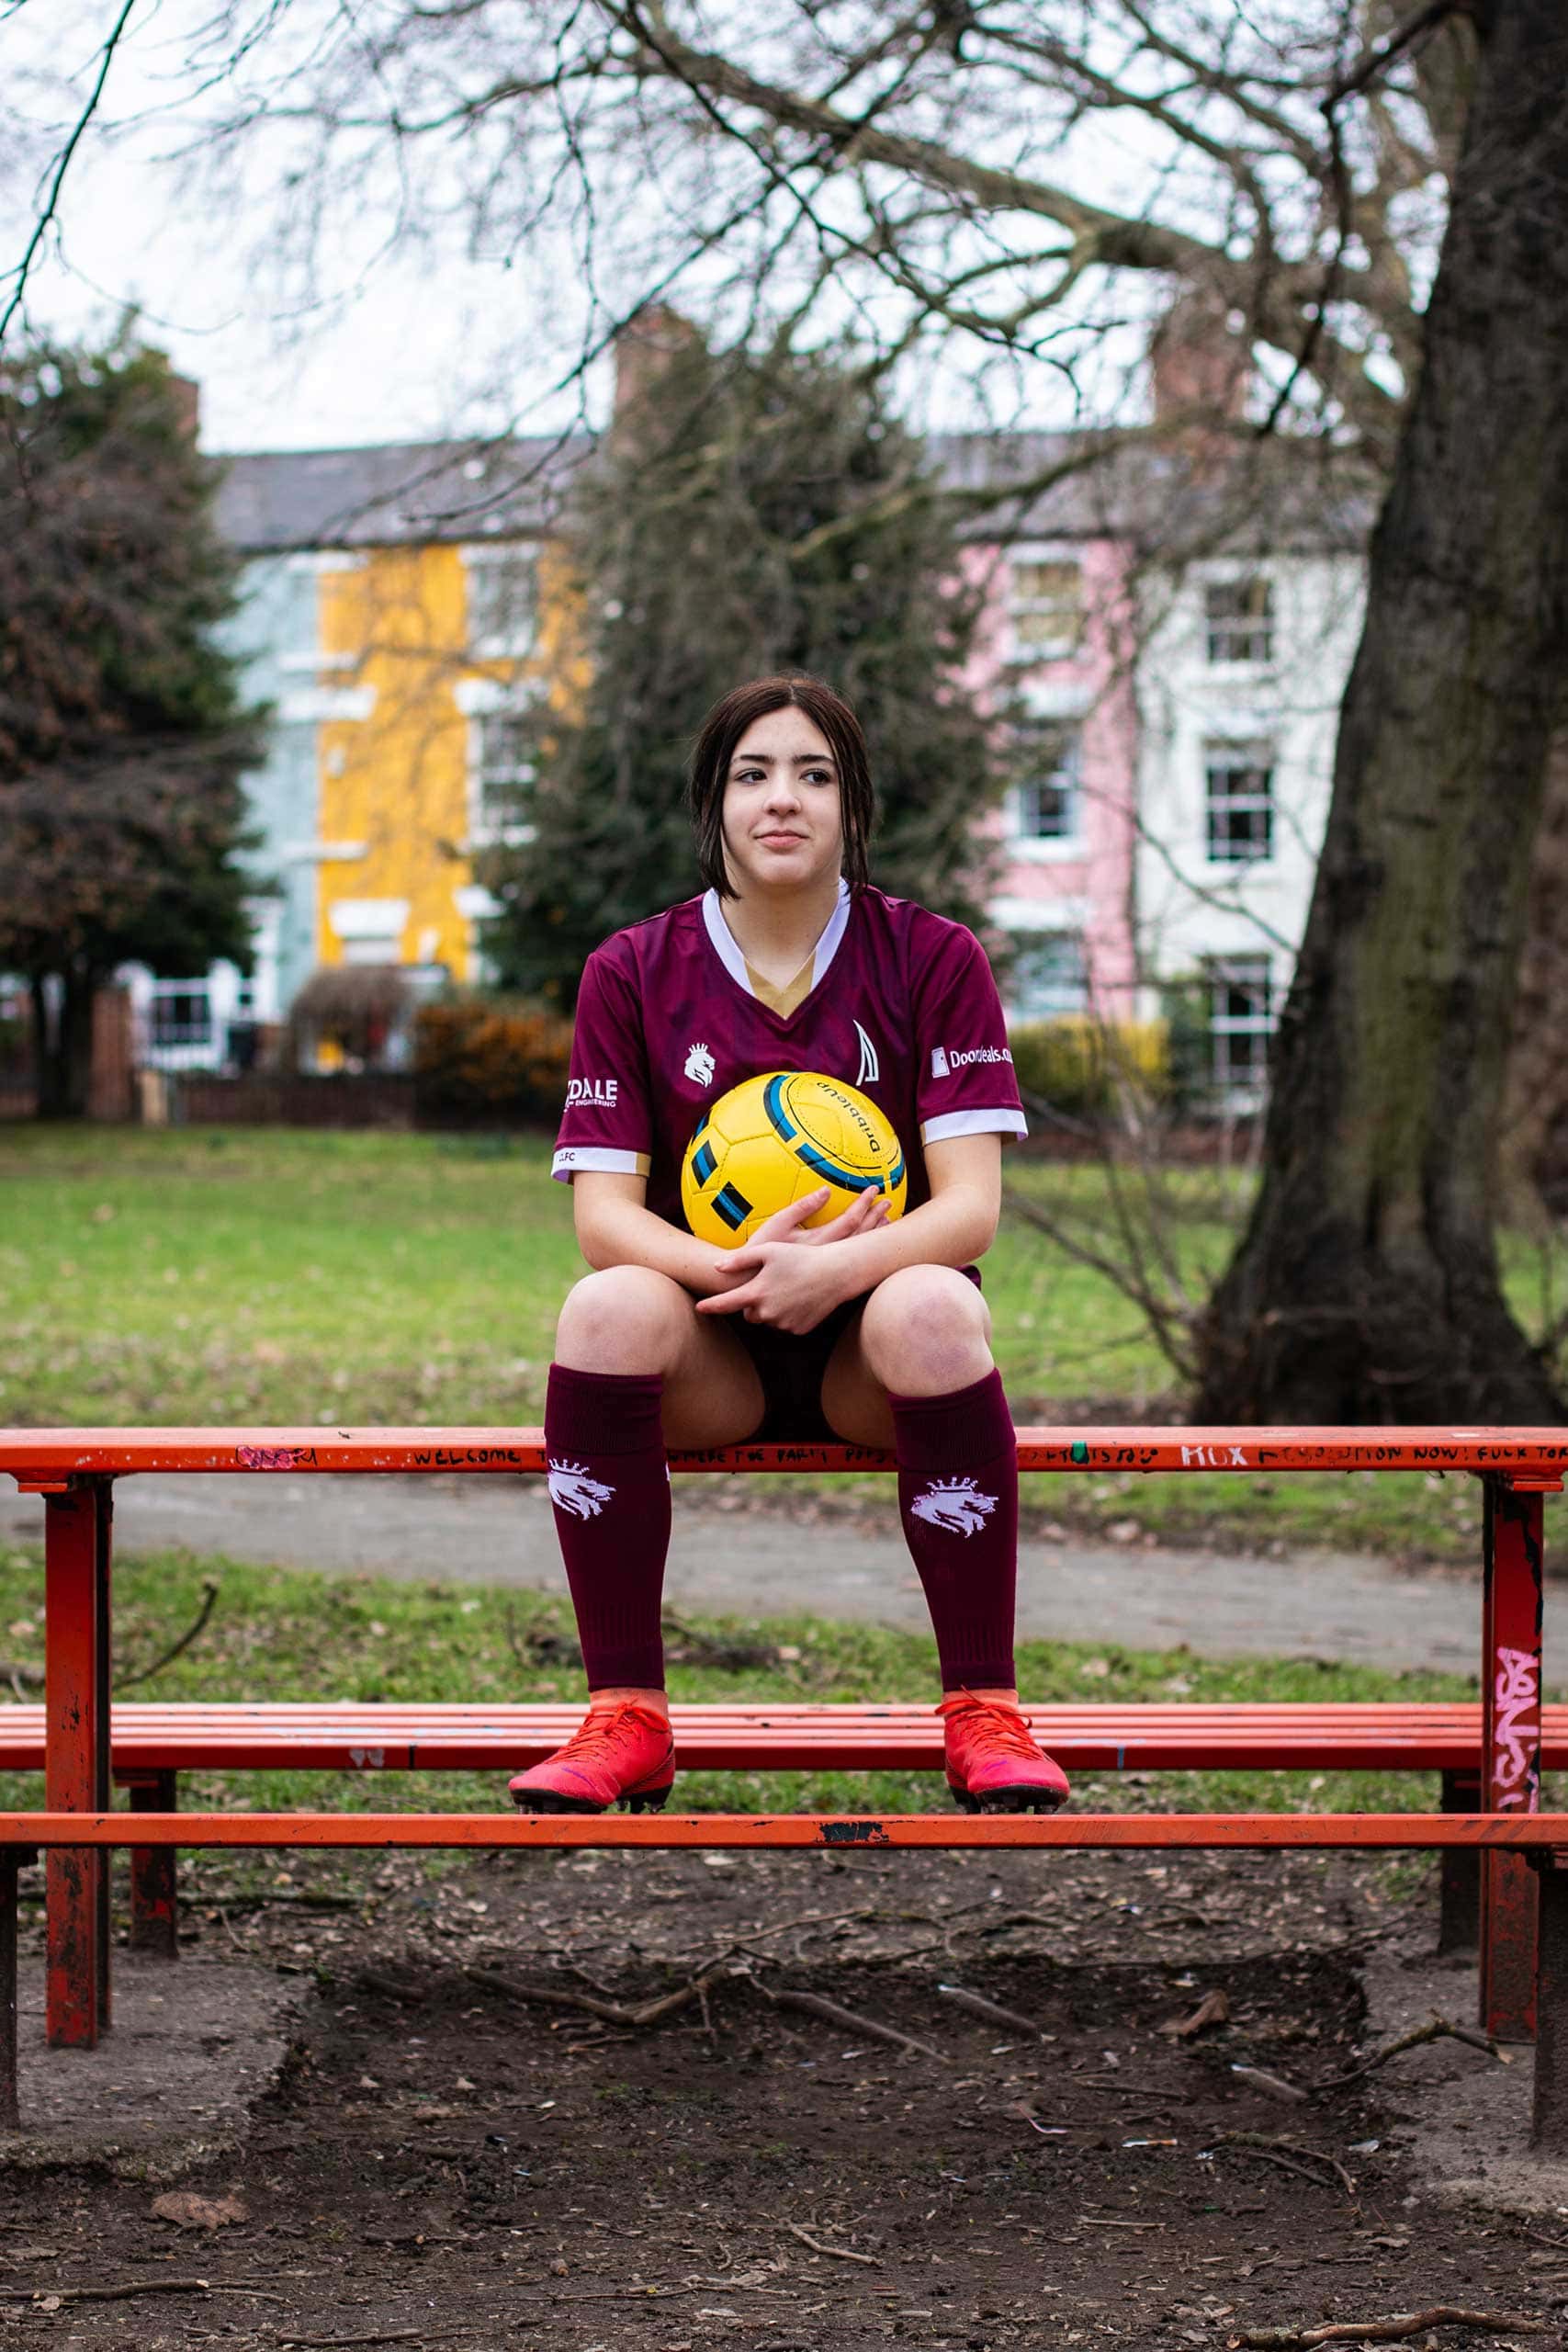 Teen Photos - Teenage girl sitting on park bench table holding football